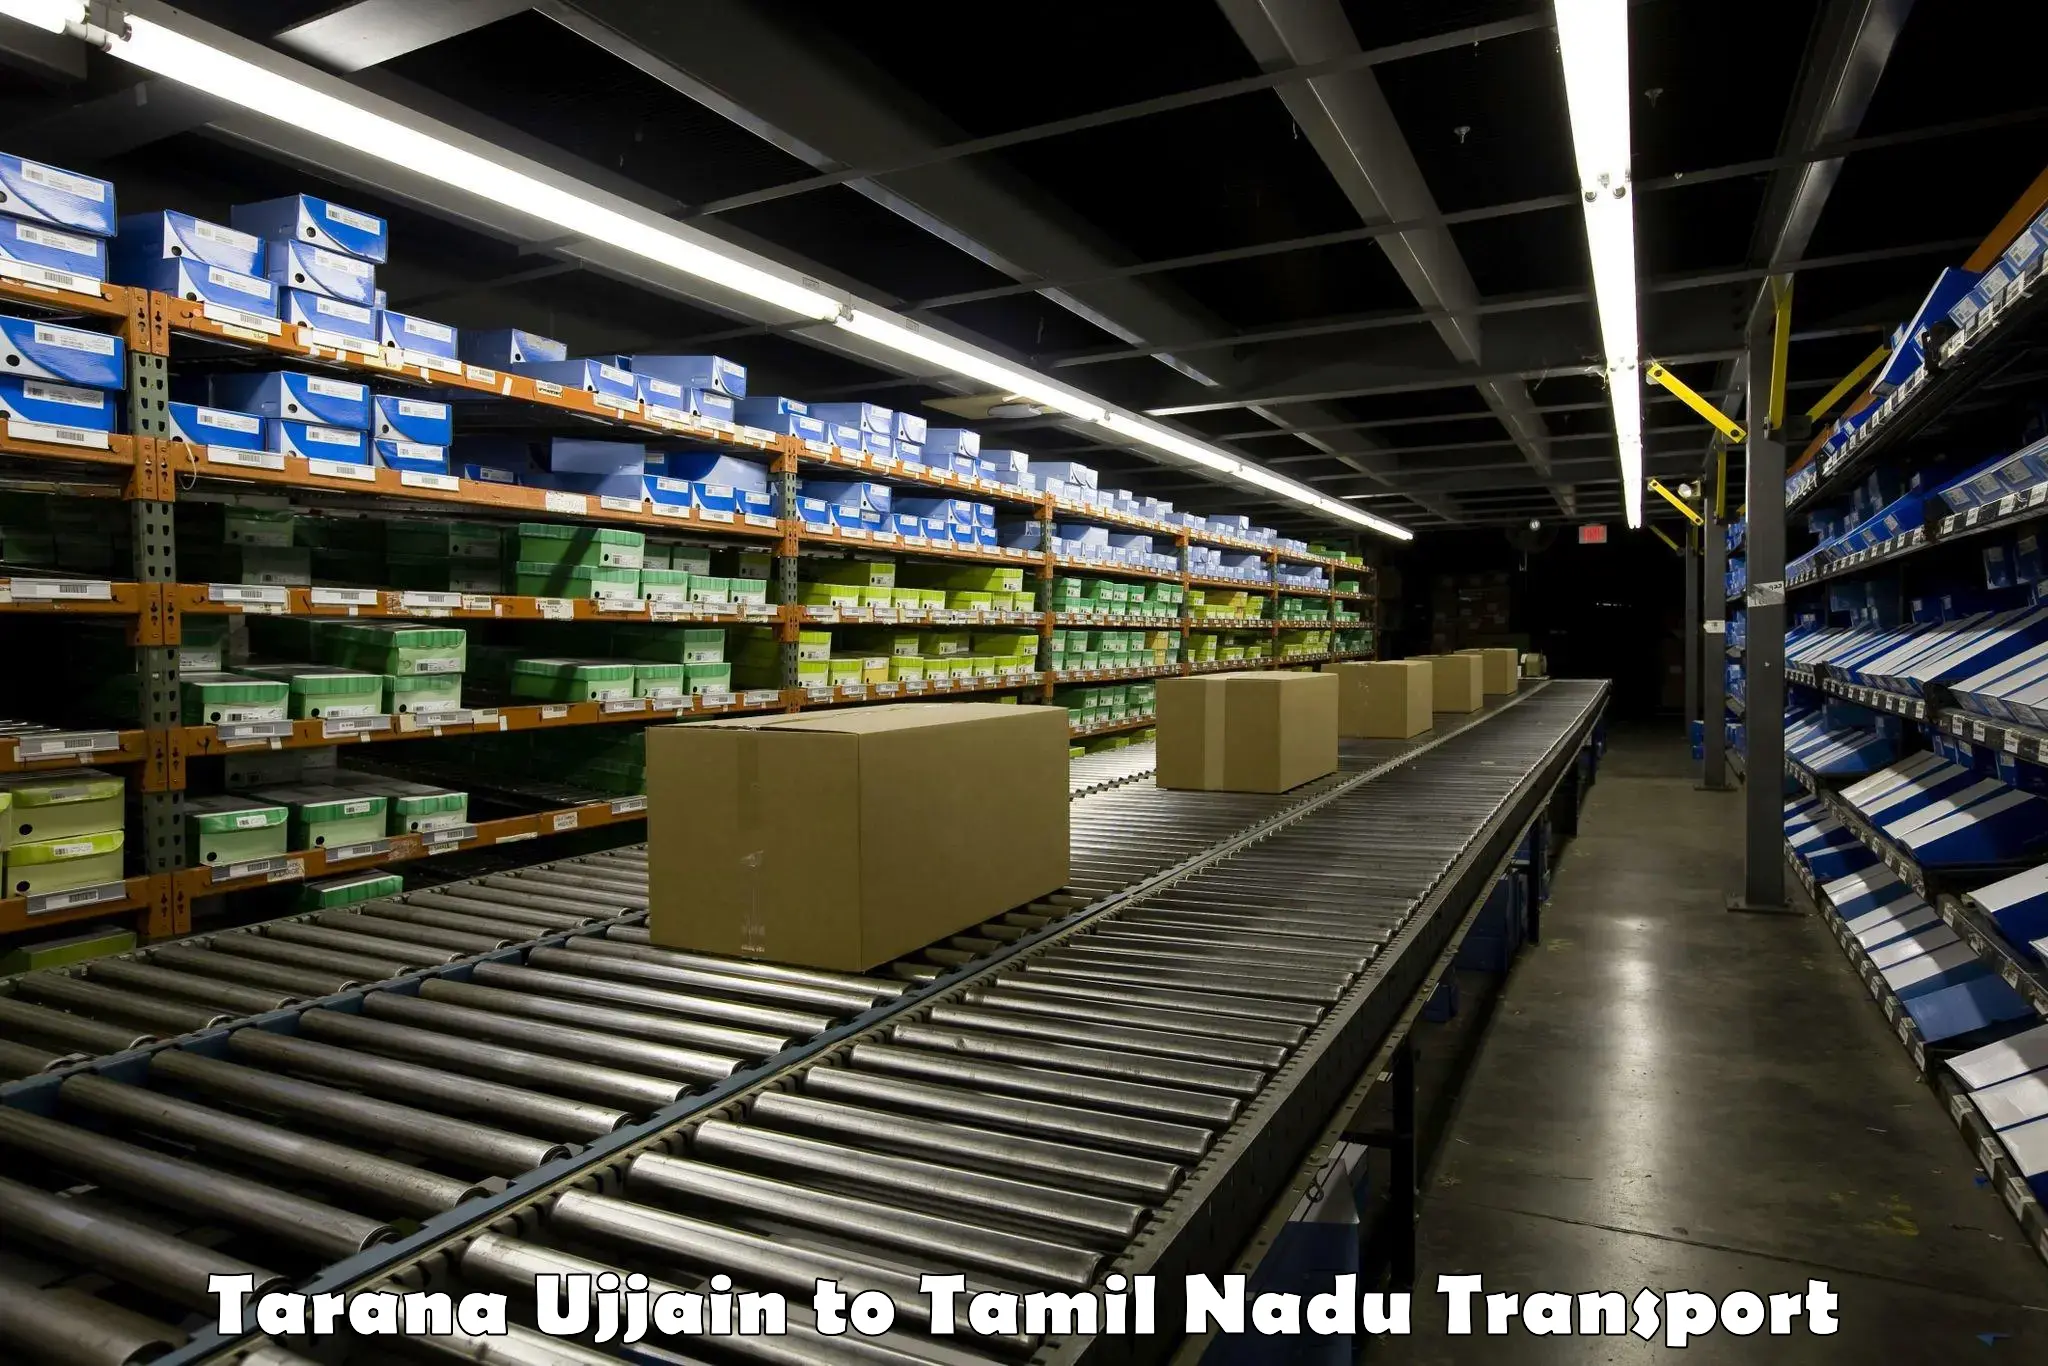 Delivery service Tarana Ujjain to Tirunelveli